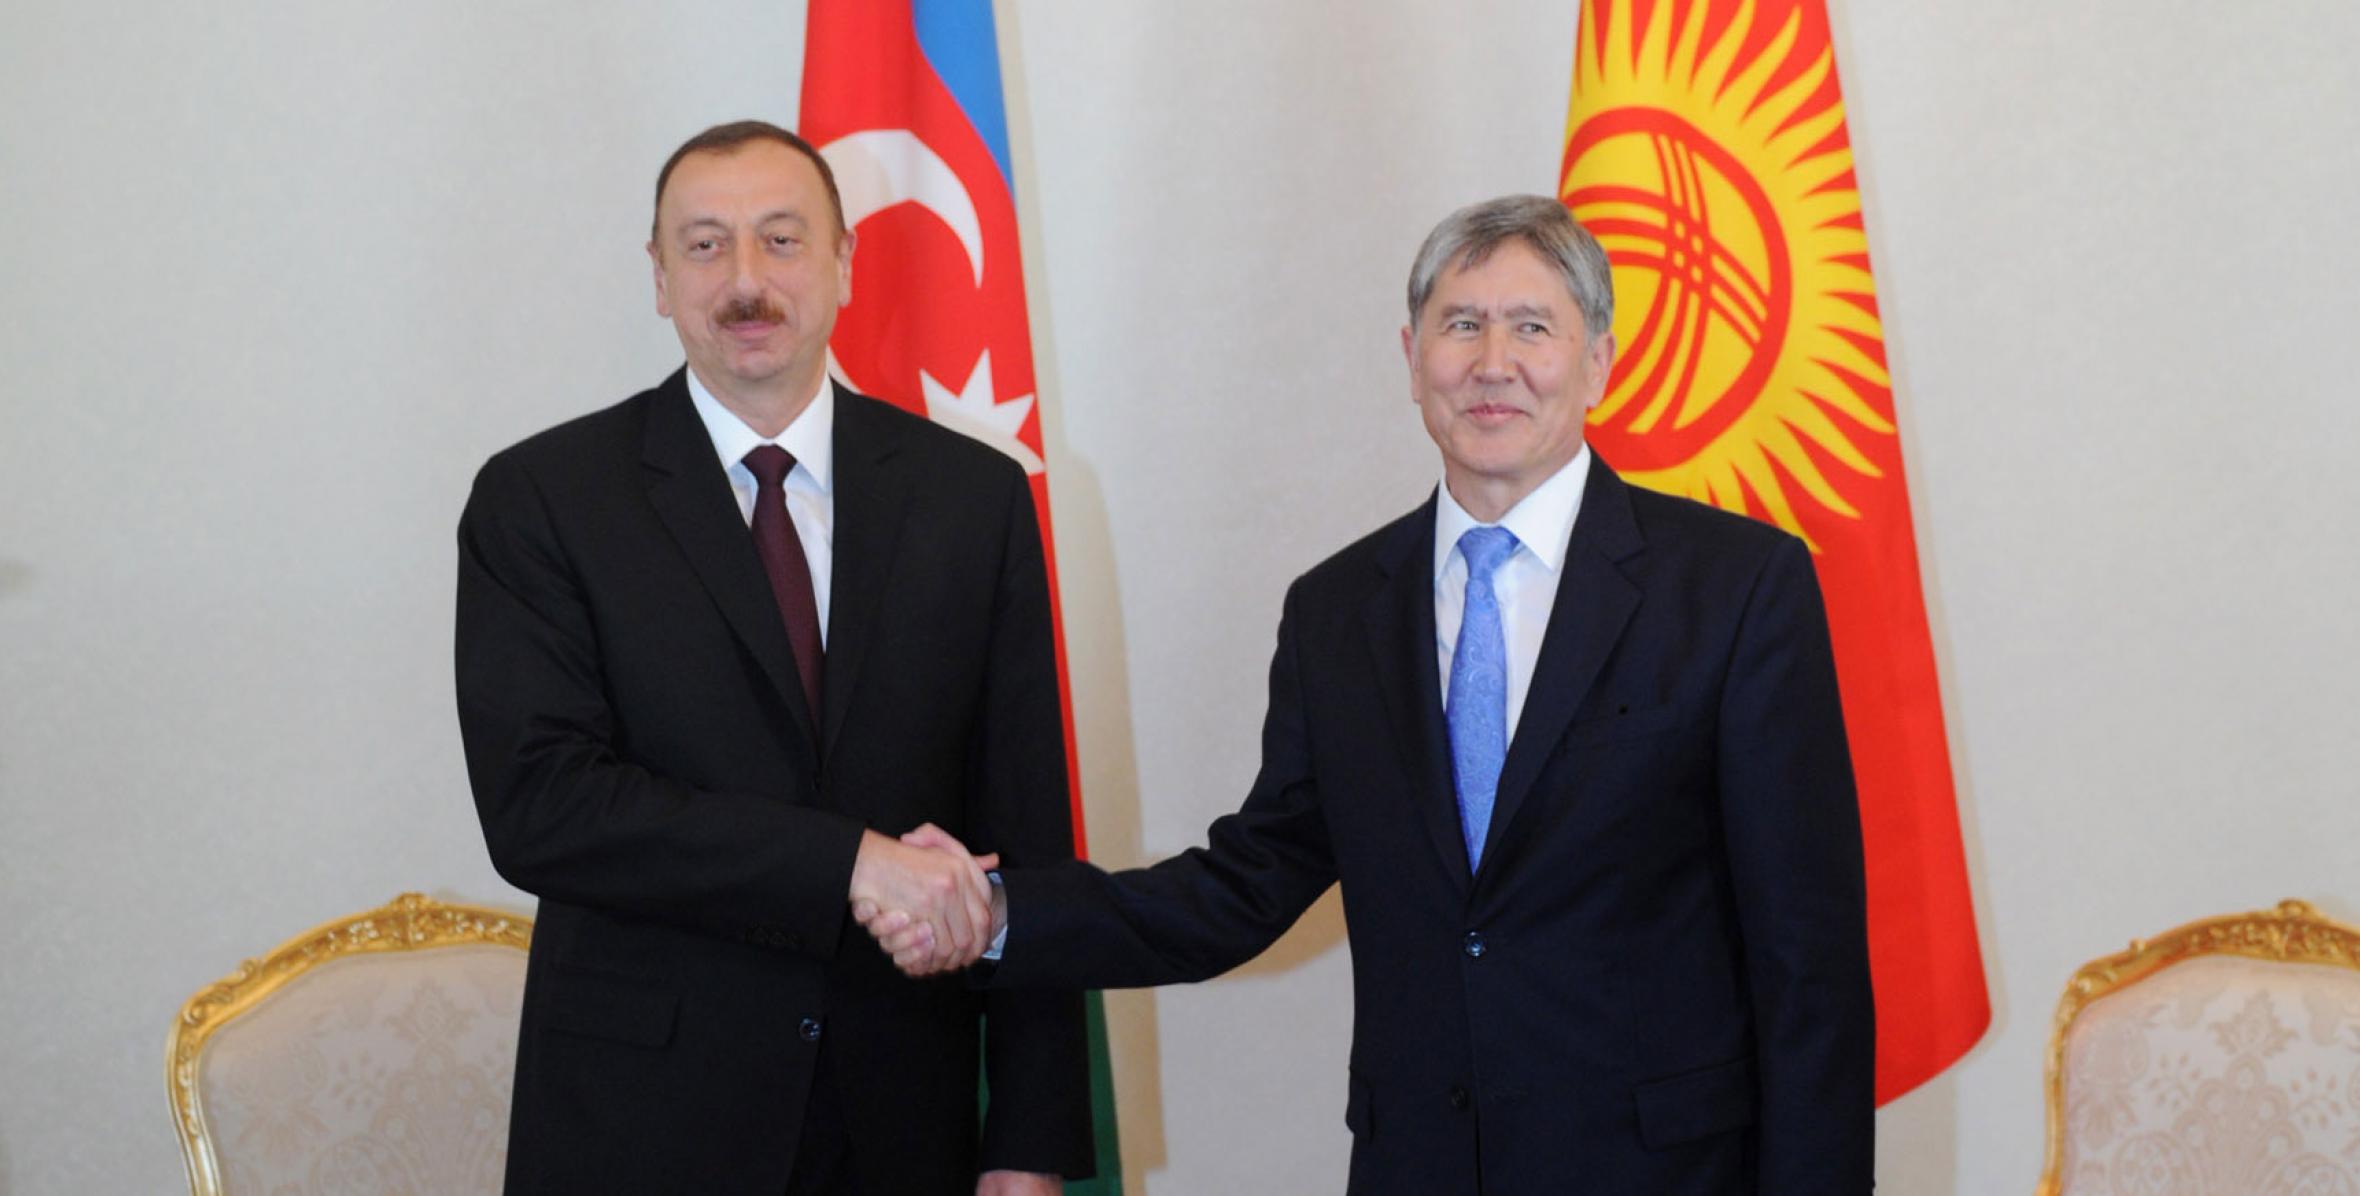 Ilham Aliyev met with President of Kyrgyzstan Almazbek Atambayev in Moscow